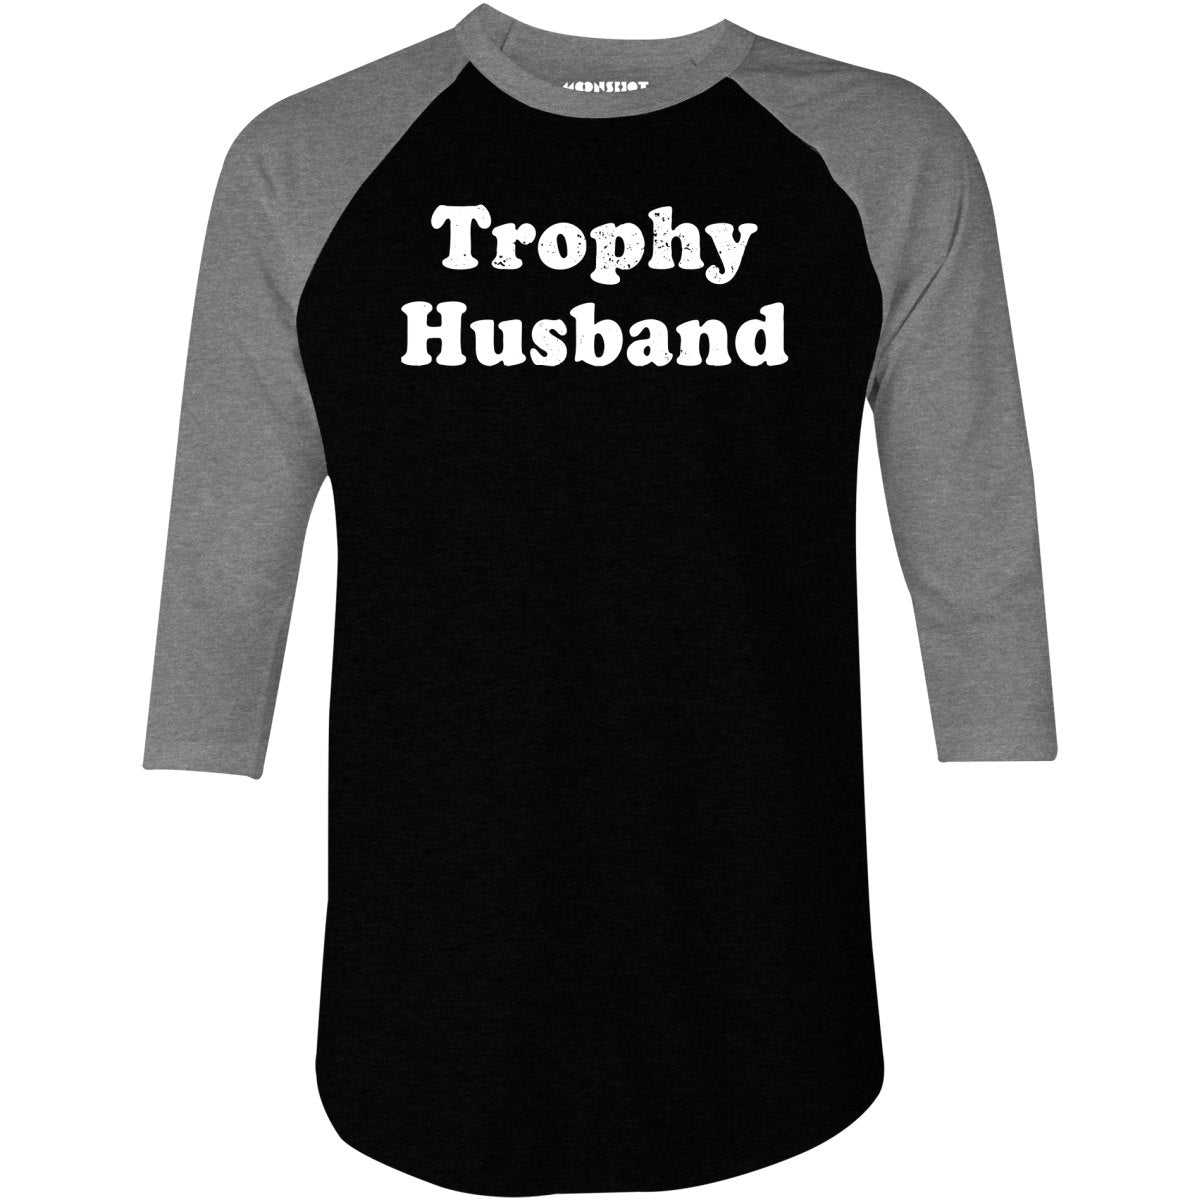 Trophy Husband - 3/4 Sleeve Raglan T-Shirt